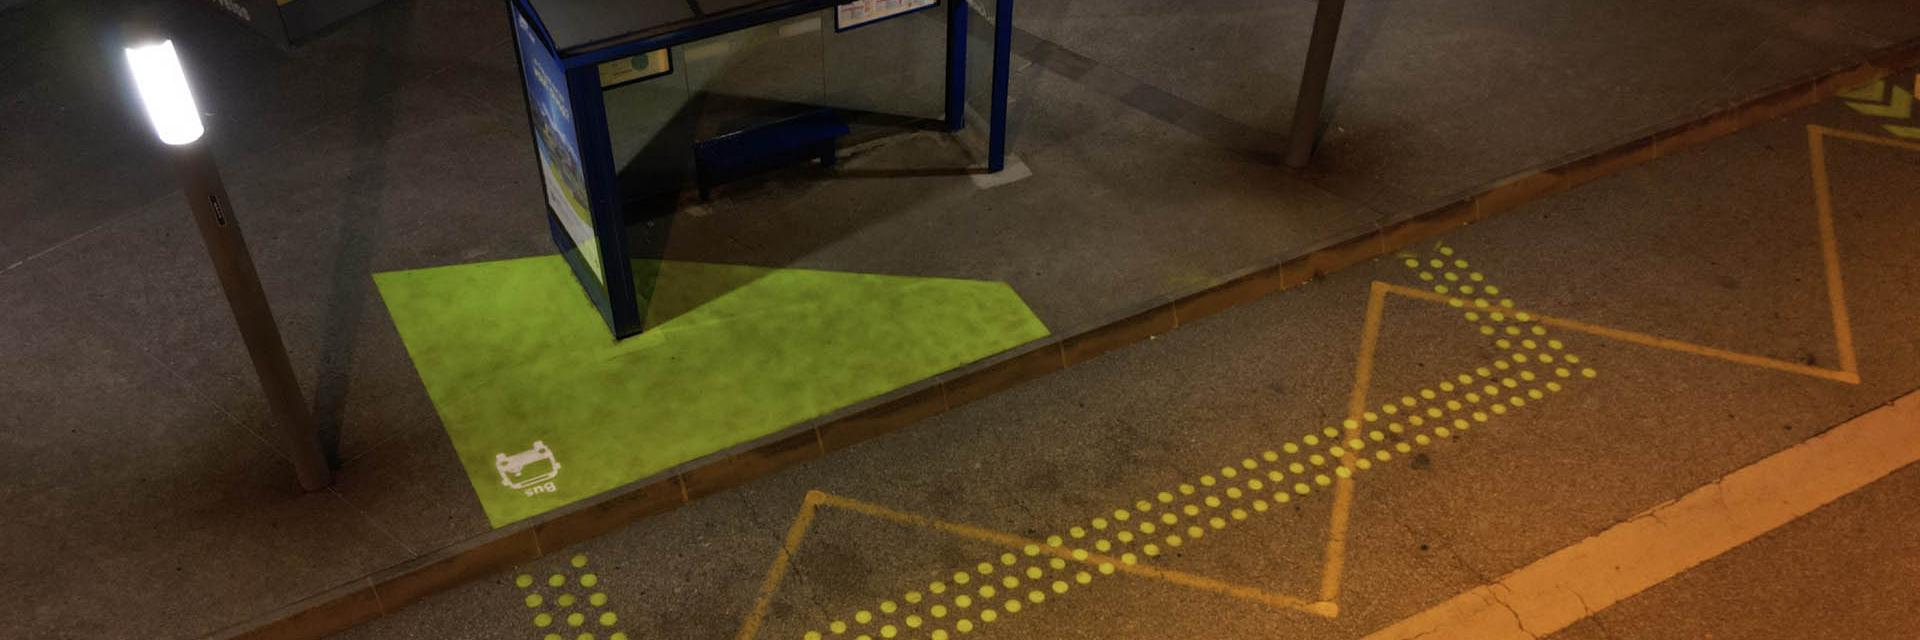 Marquage au sol devant un abri-bus